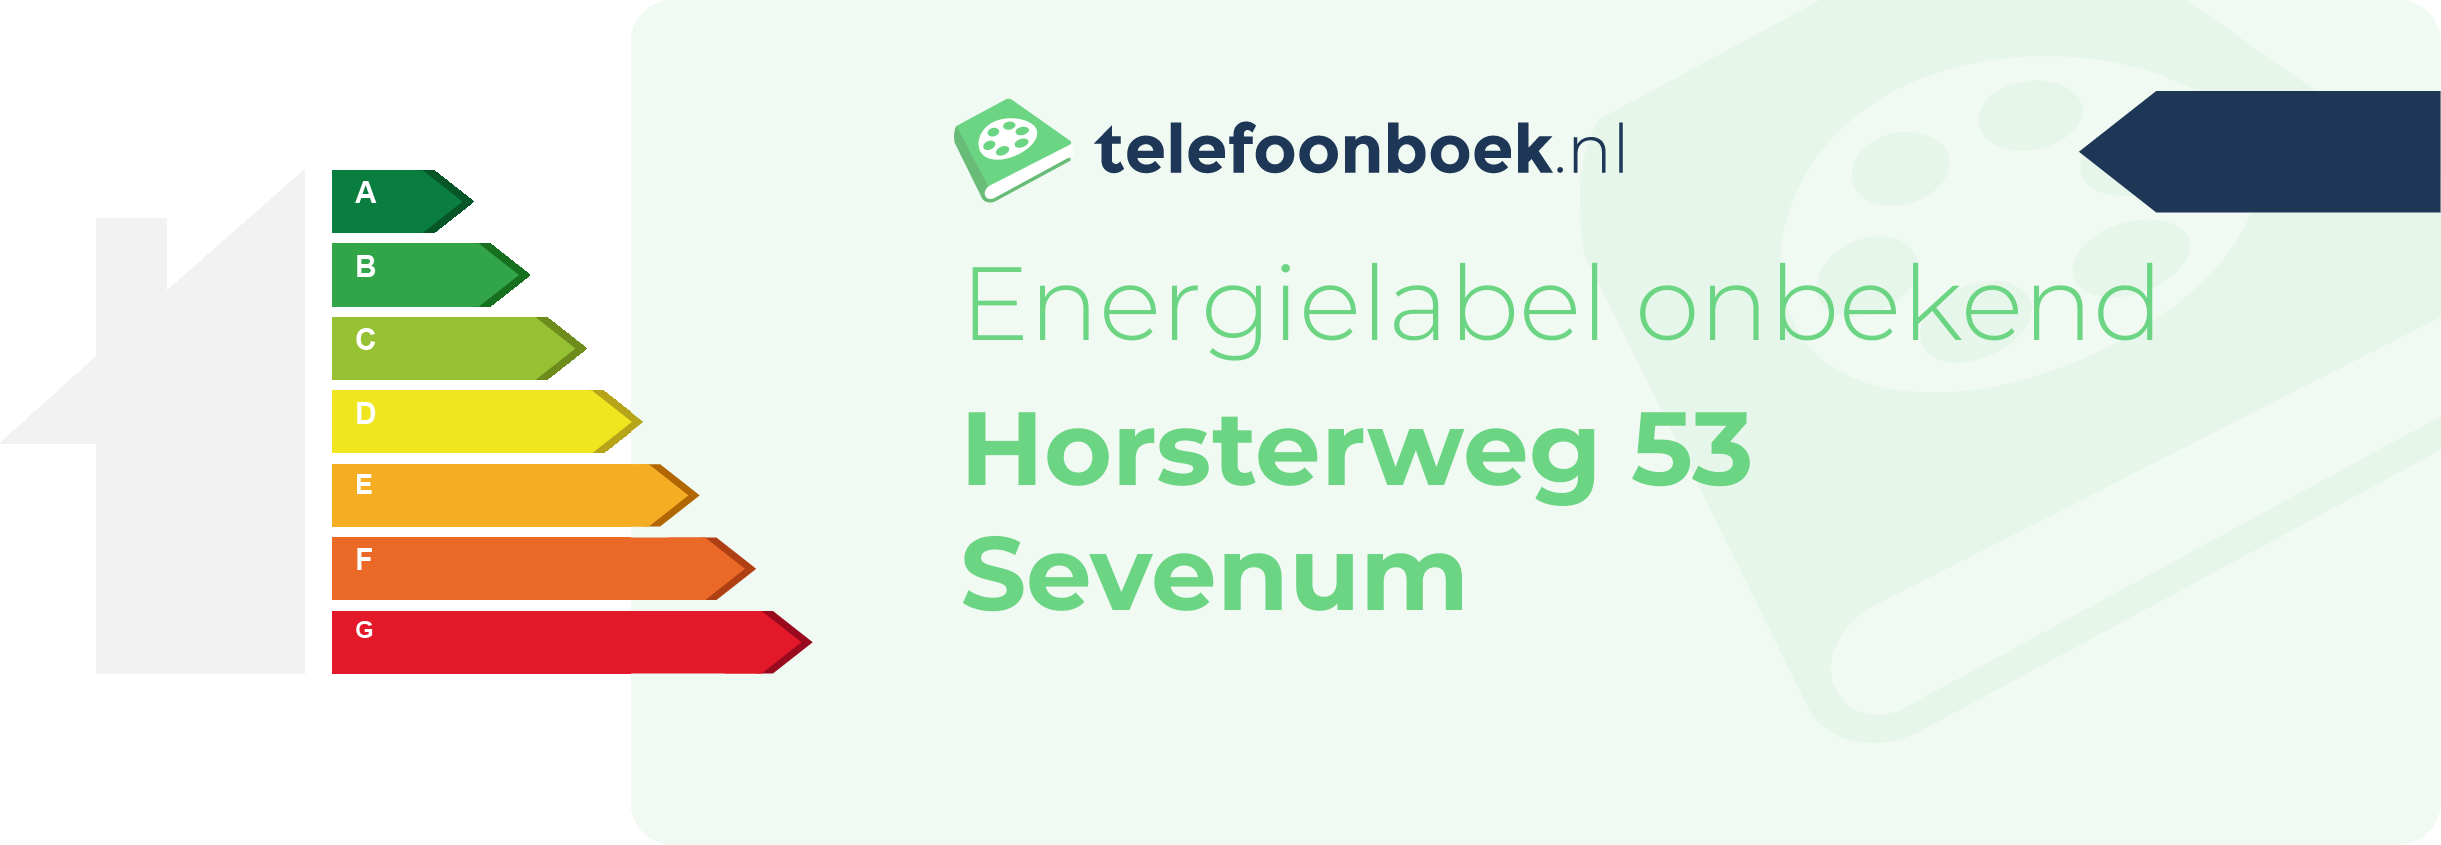 Energielabel Horsterweg 53 Sevenum